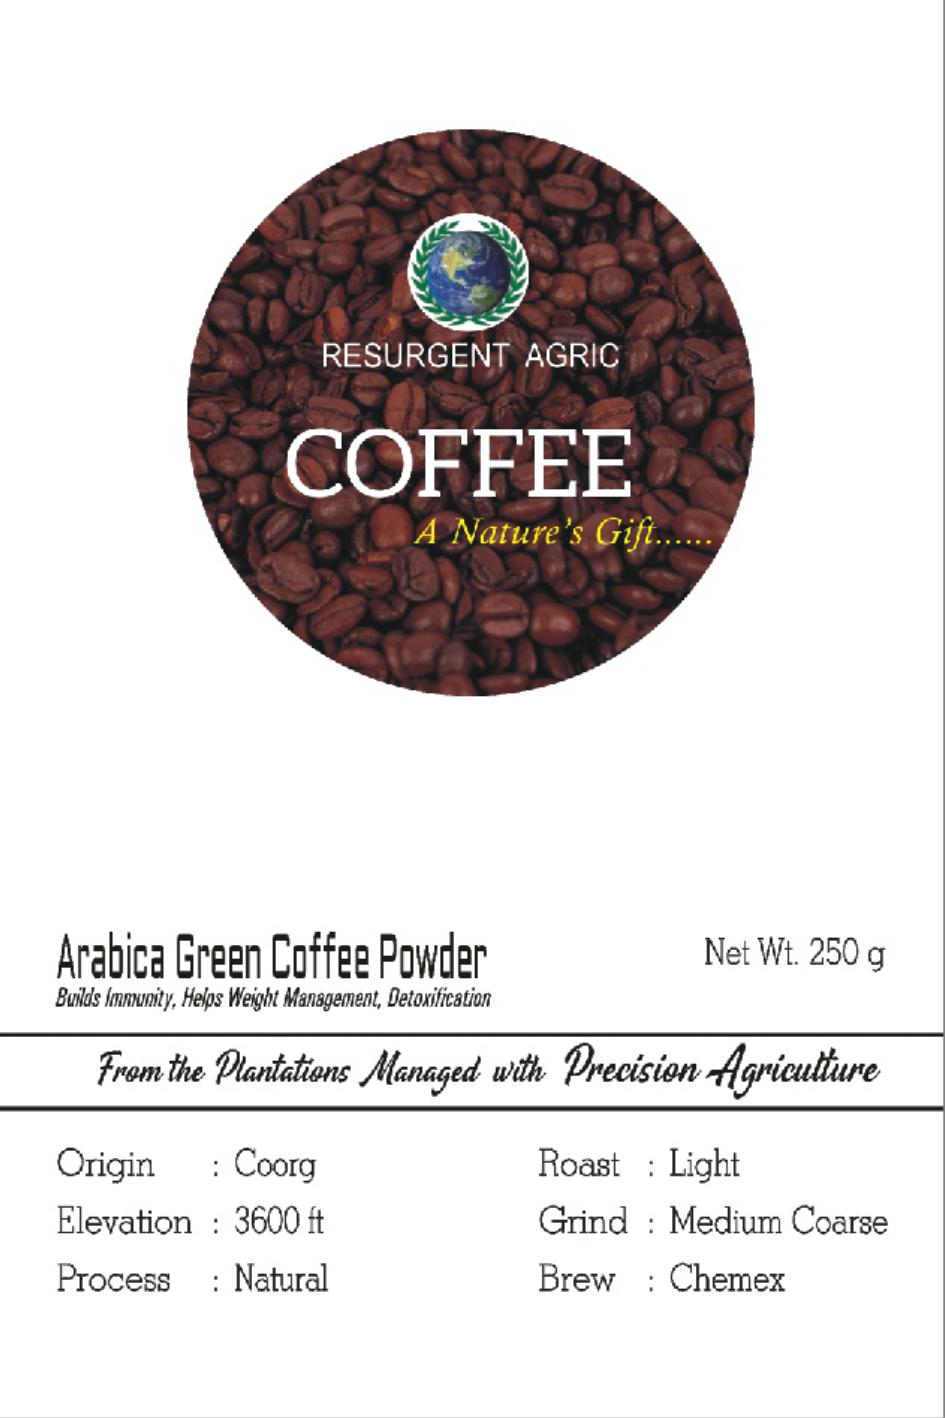 Arabica Green Coffee Powder (Light - Medium Coarse)